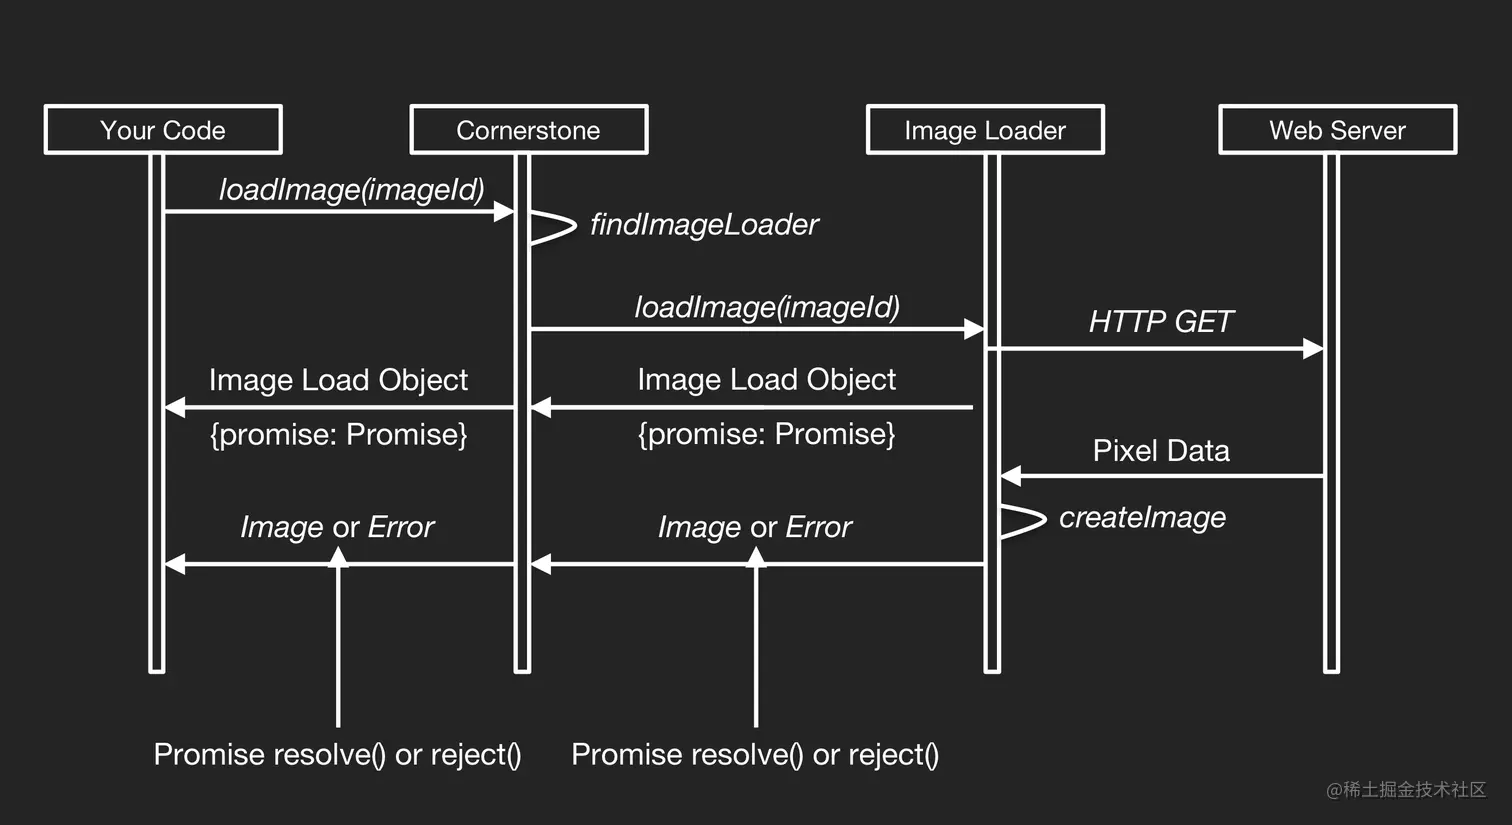 cornerstone-image-loader-workflow.png